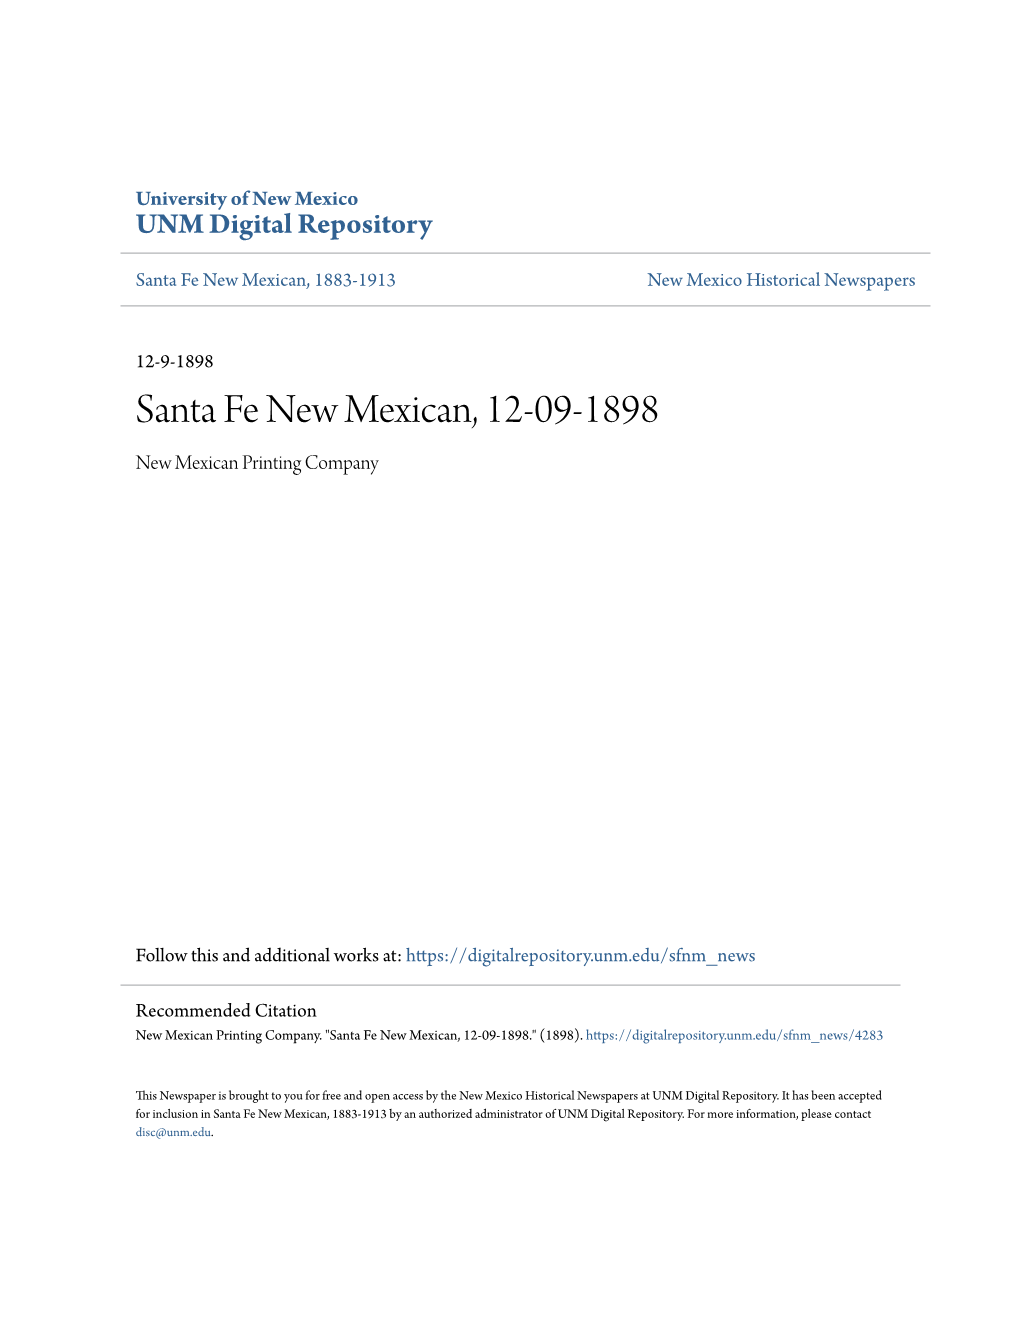 Santa Fe New Mexican, 12-09-1898 New Mexican Printing Company